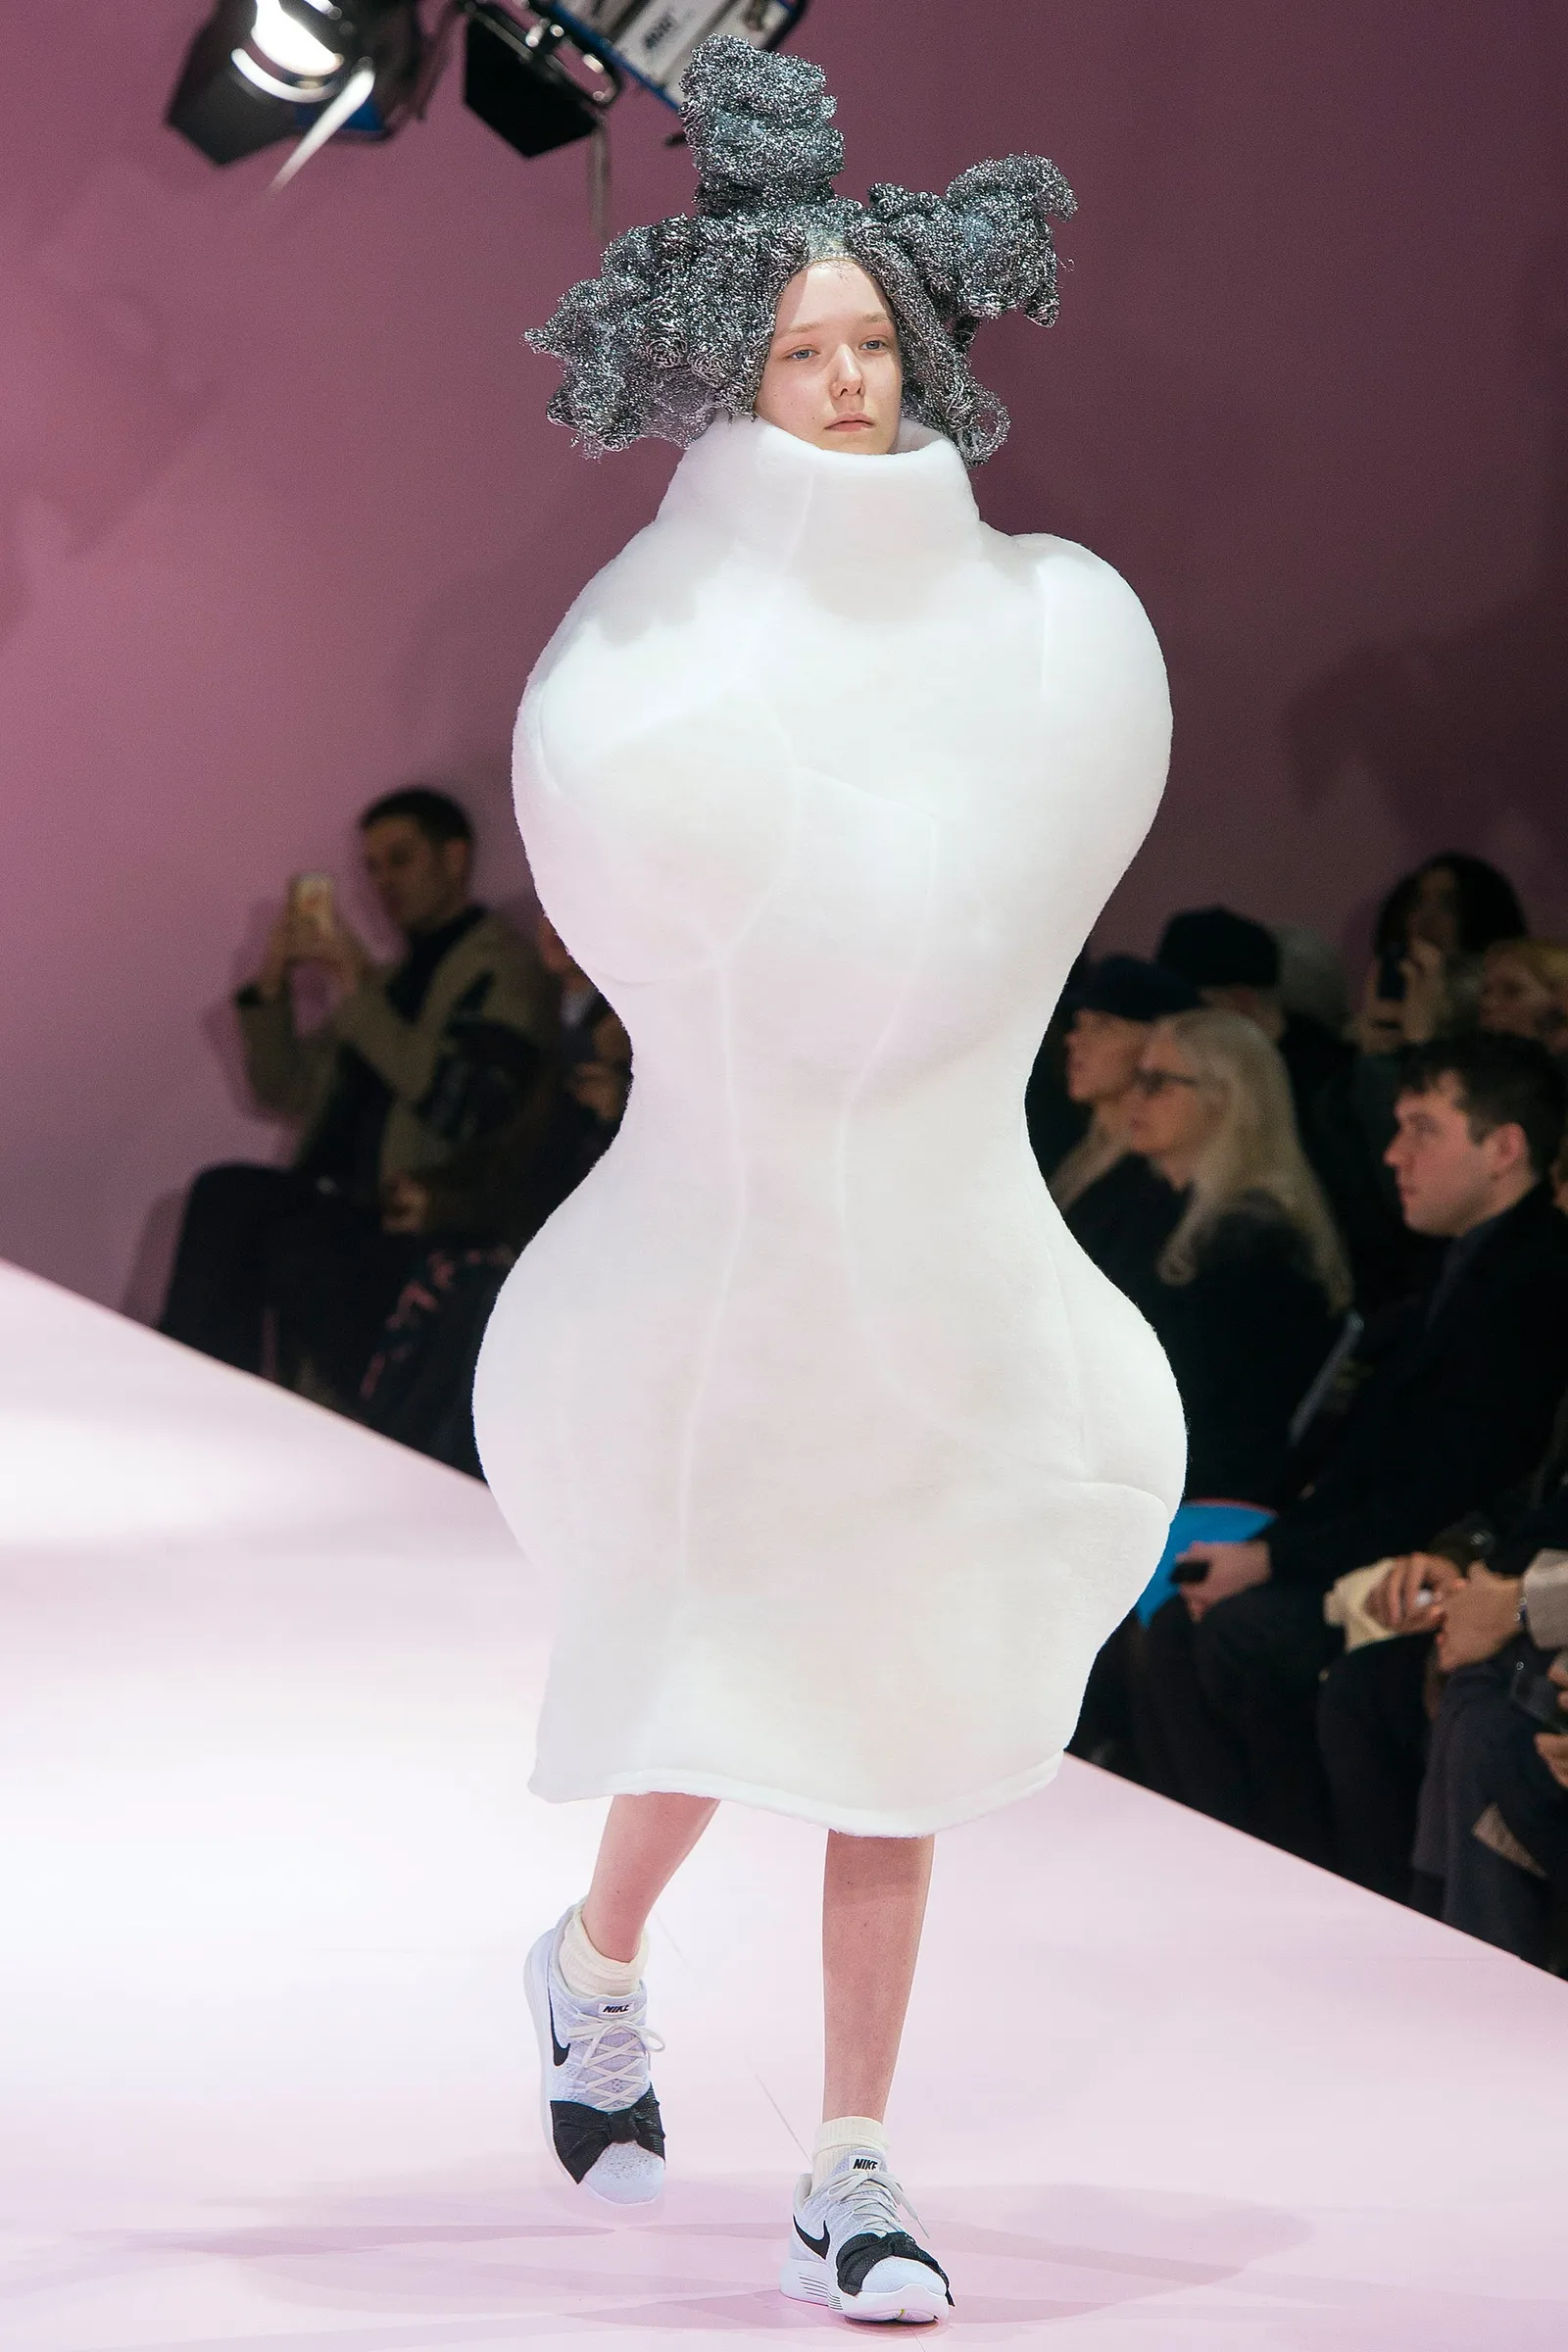 7 Dress 'Nyeleneh' Rancangan Brand Ternama yang Viral di Sosmed